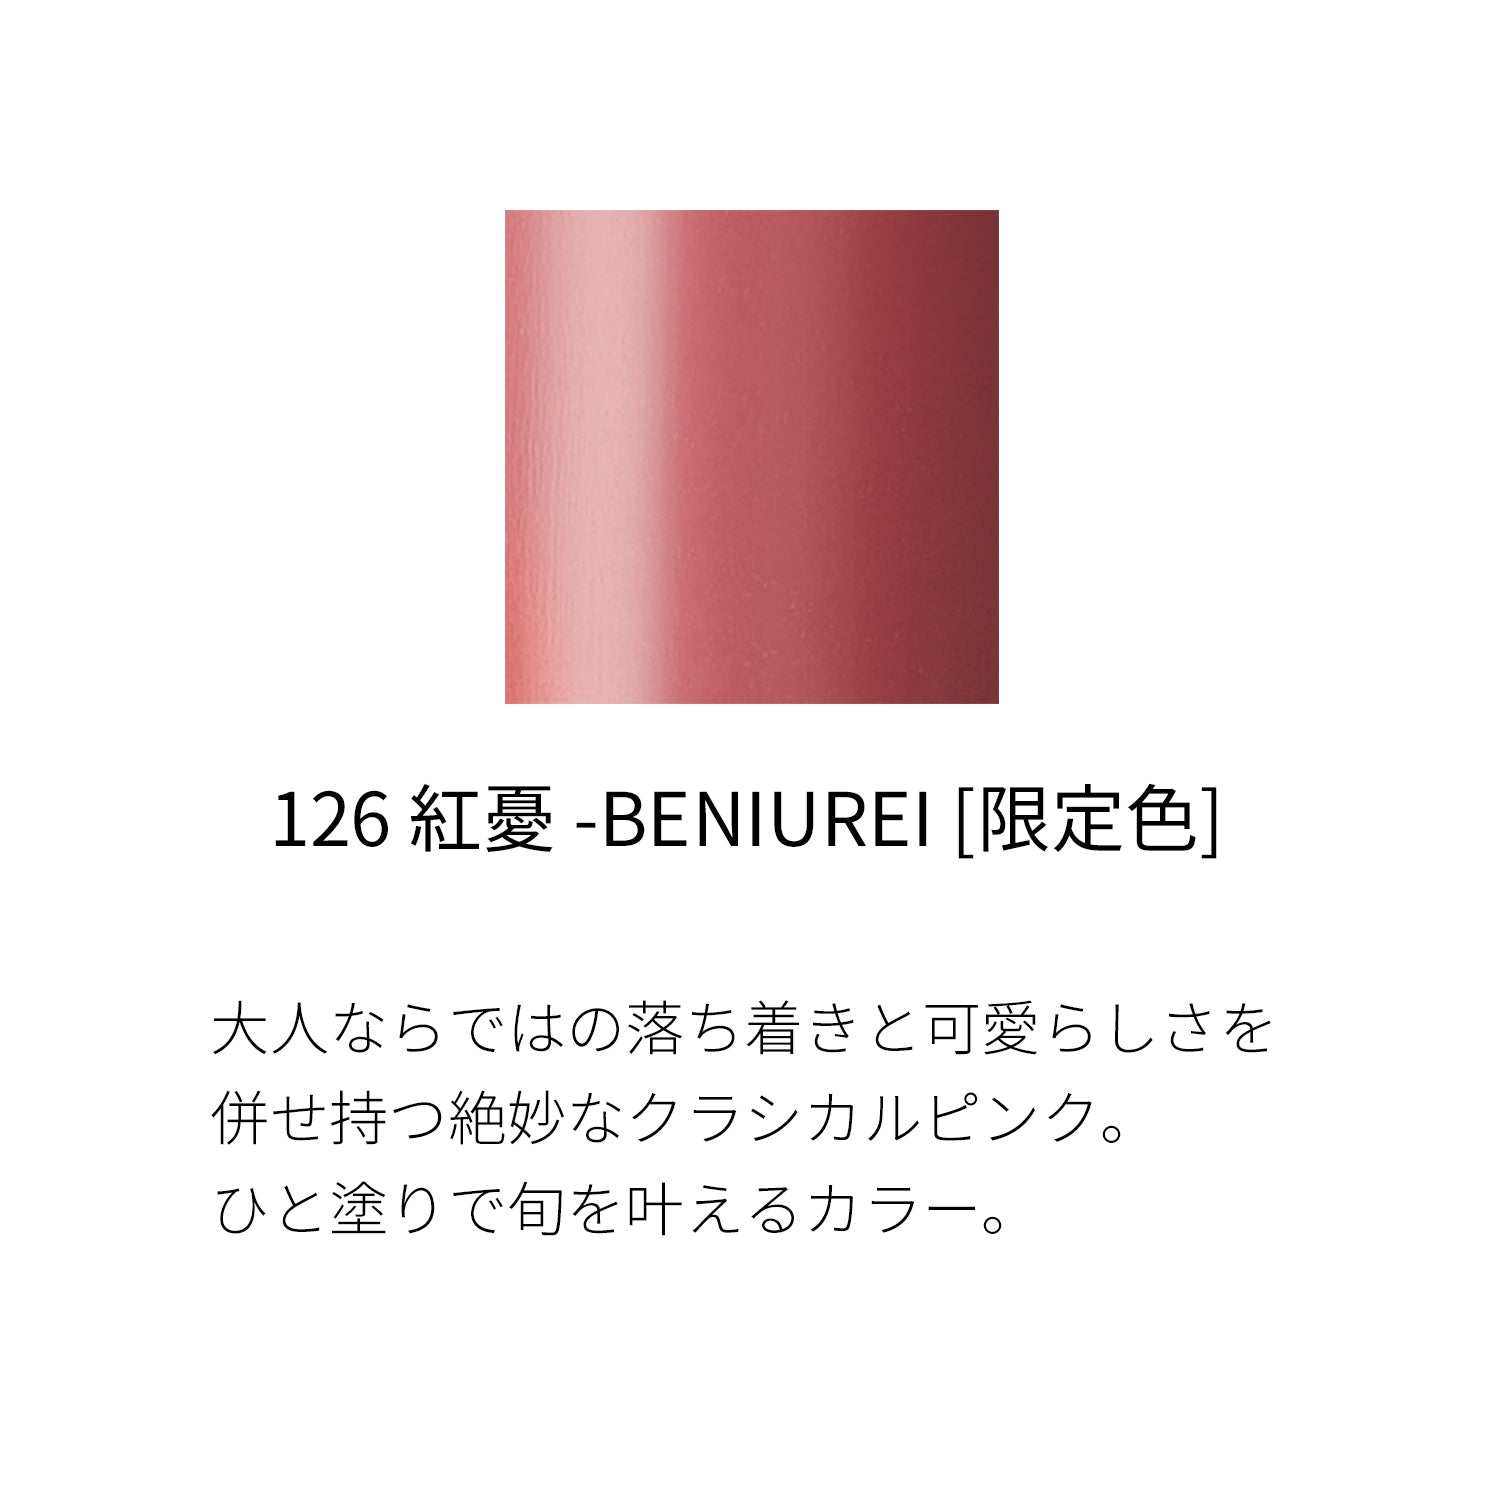 Suqqu Moisture Rich Lipstick (Autumn/Winter 2023 Color Collection) - Ichiban Mart